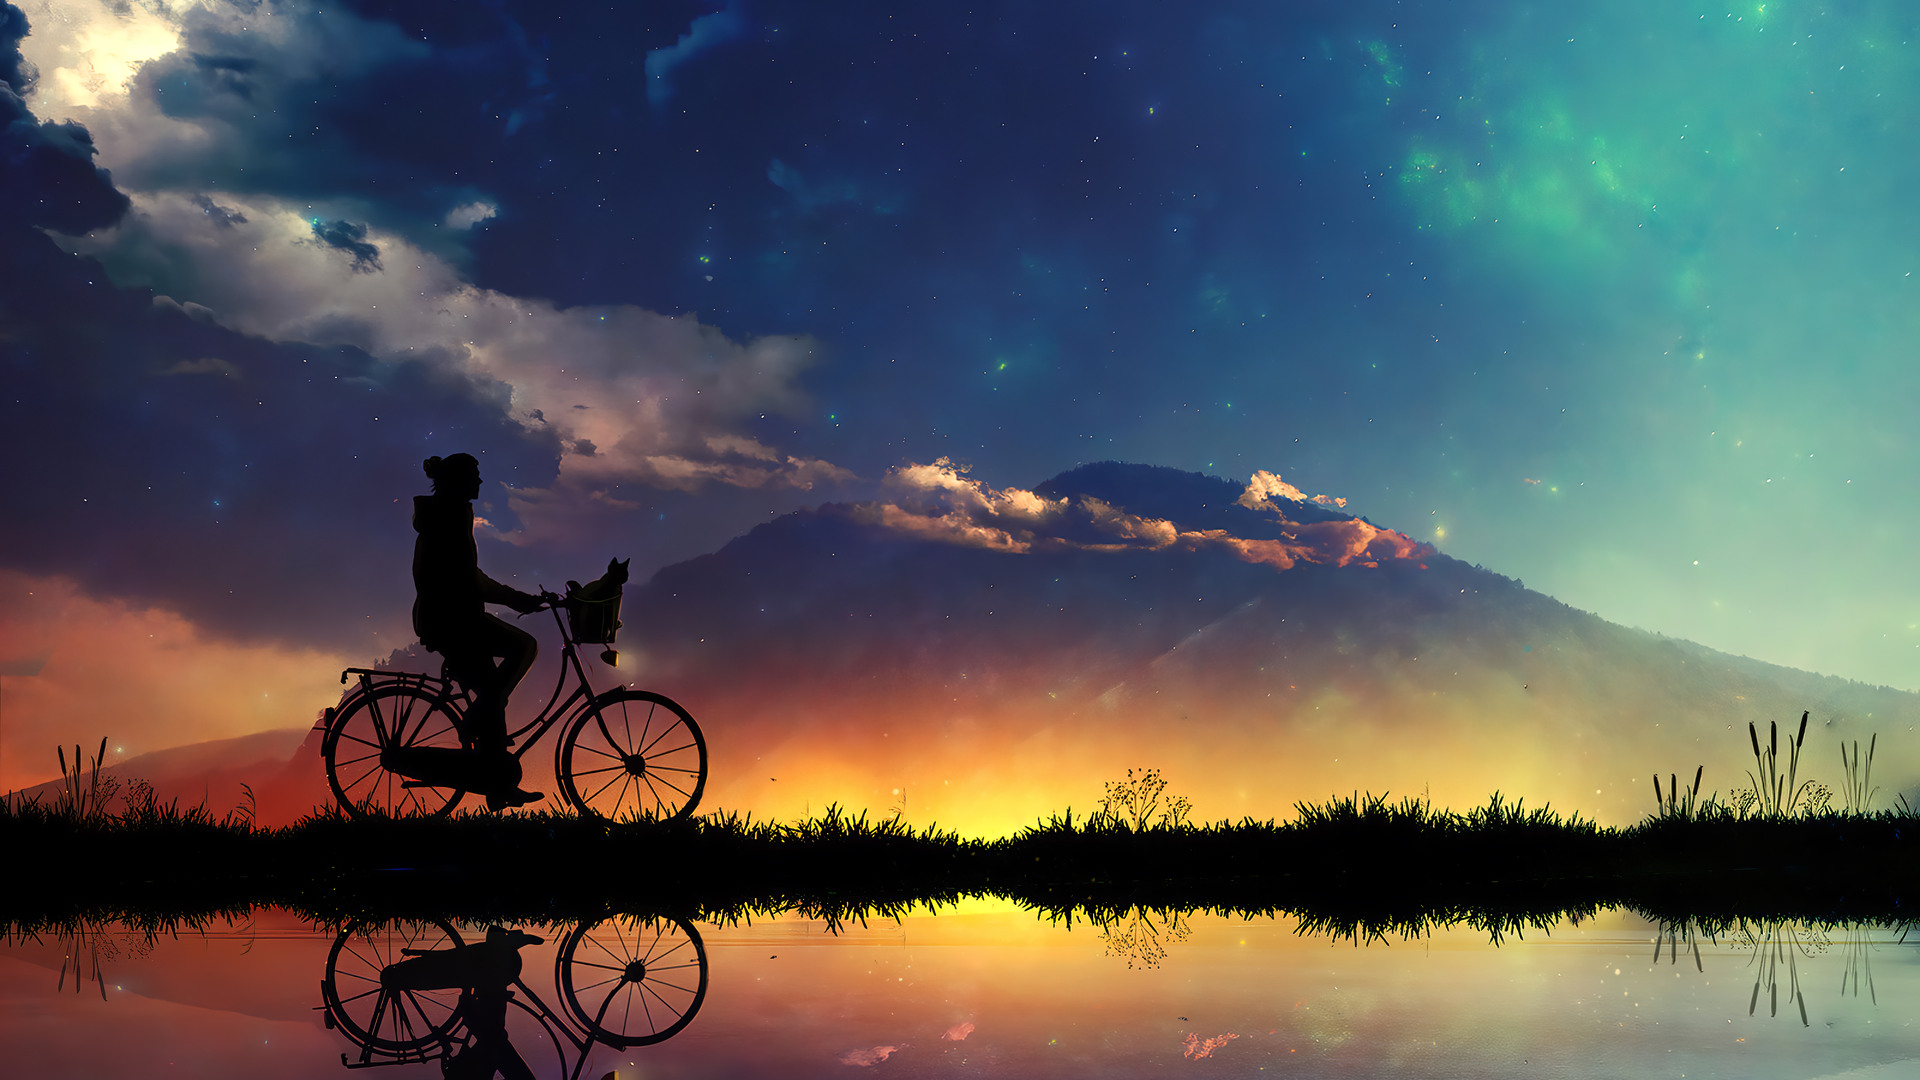 Sunset Sky Scenery Riding Bicycle Silhouette Digital Art 4k